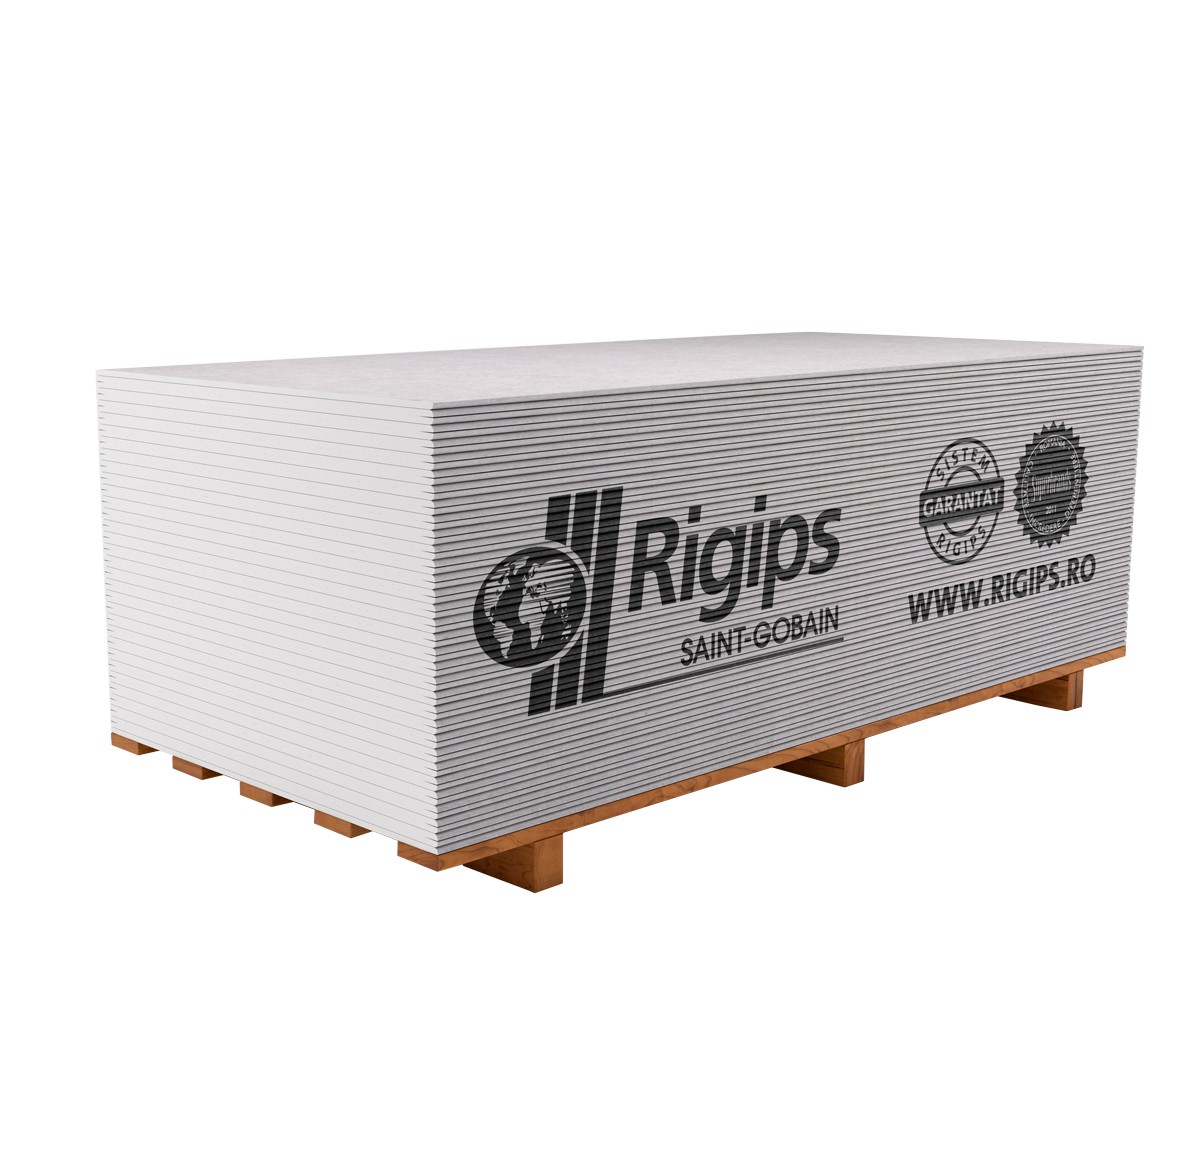 Common drywall tiles - Rigips RB 12.5 x 1200 x 2600 mm, https:maxbau.ro